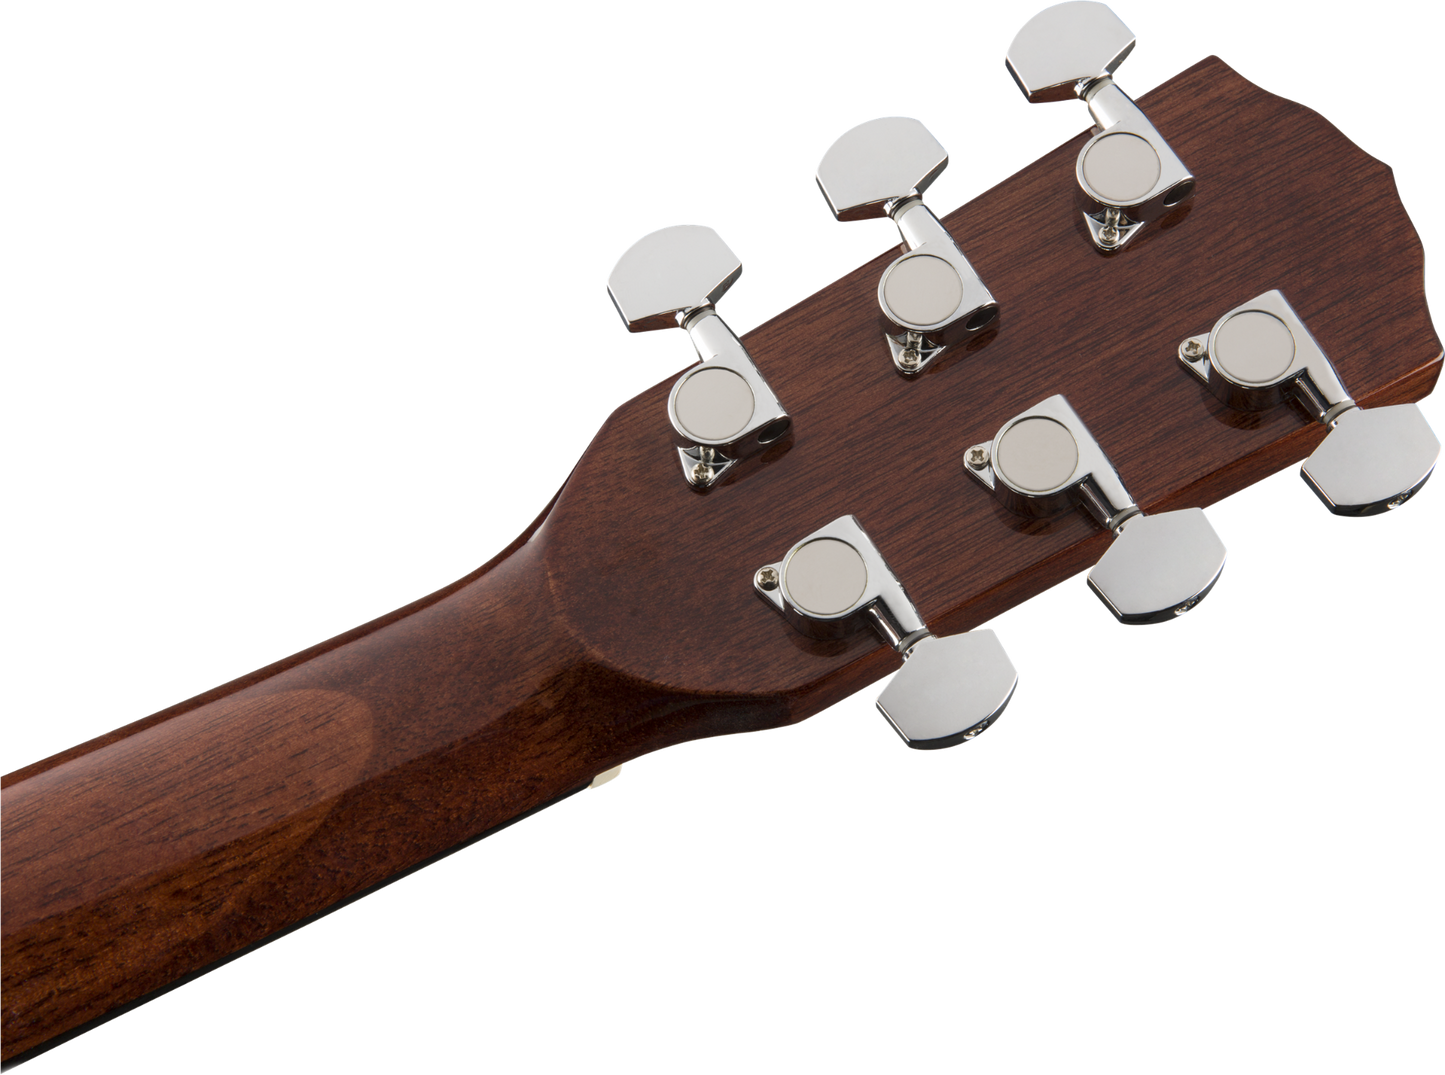 Fender CC60s Left Handed Solid Top Concert Body Acoustic Guitar in Natural